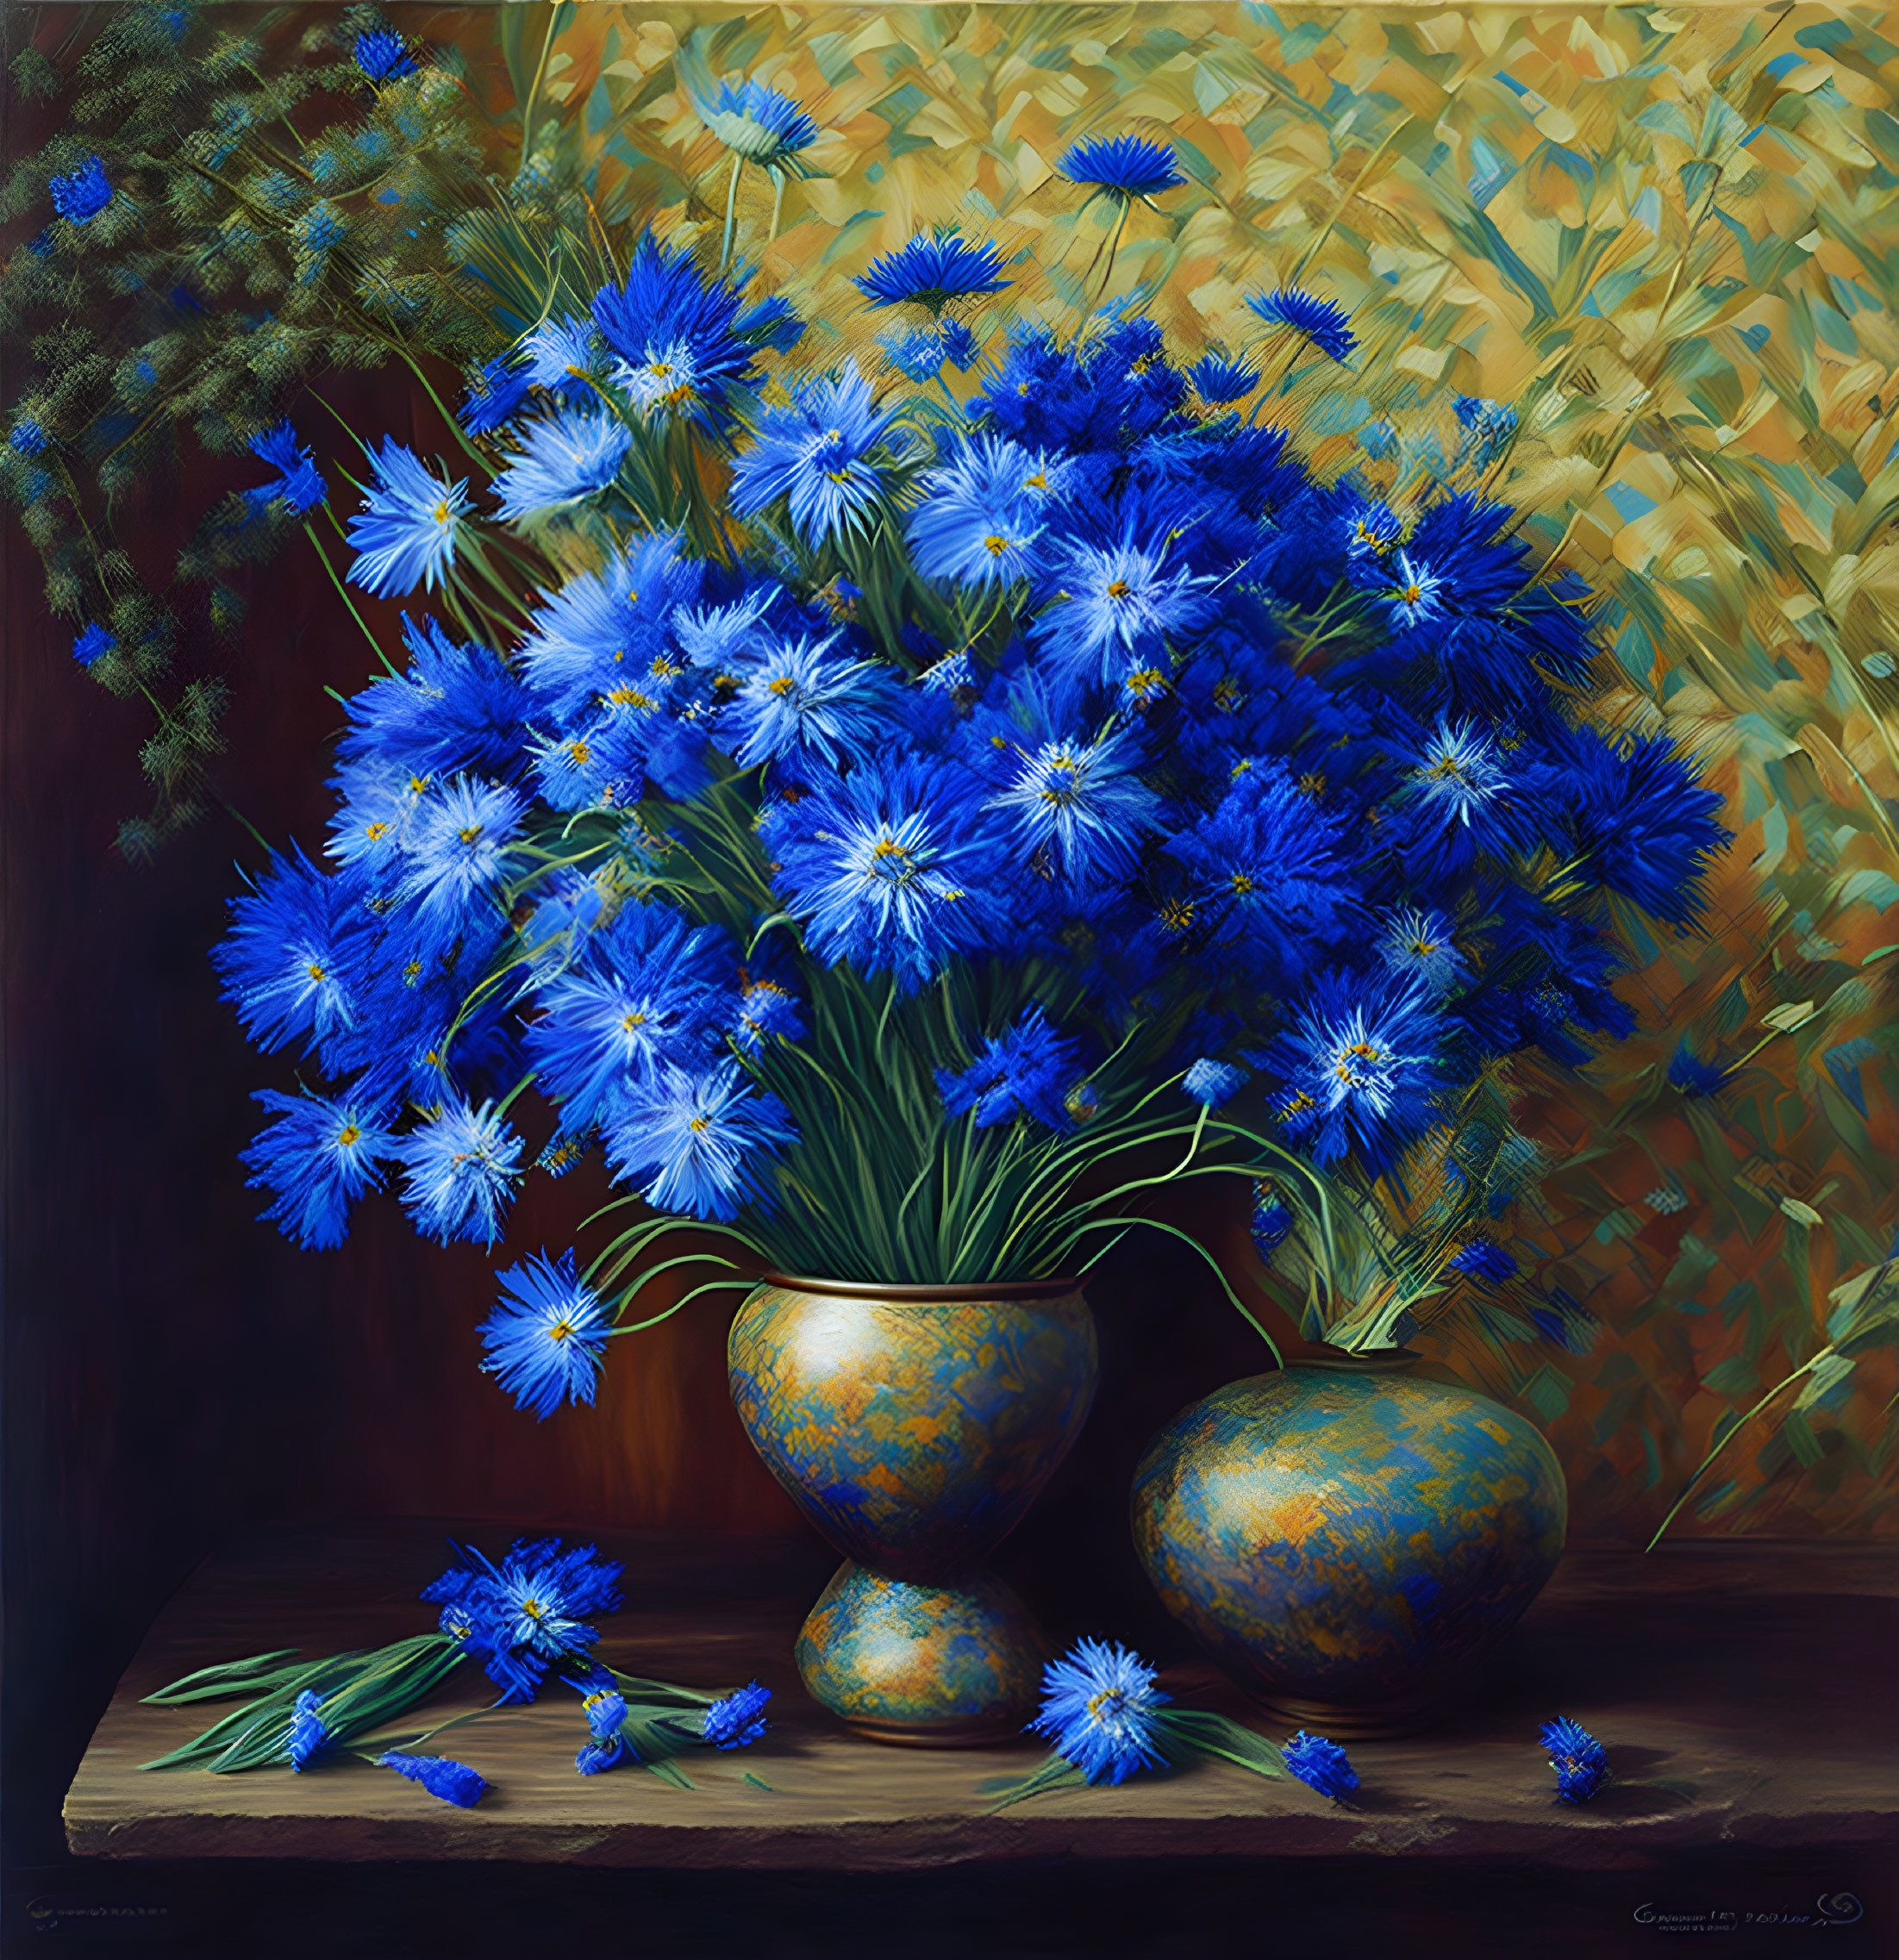 Vibrant blue flowers in ornate vases on wooden surface